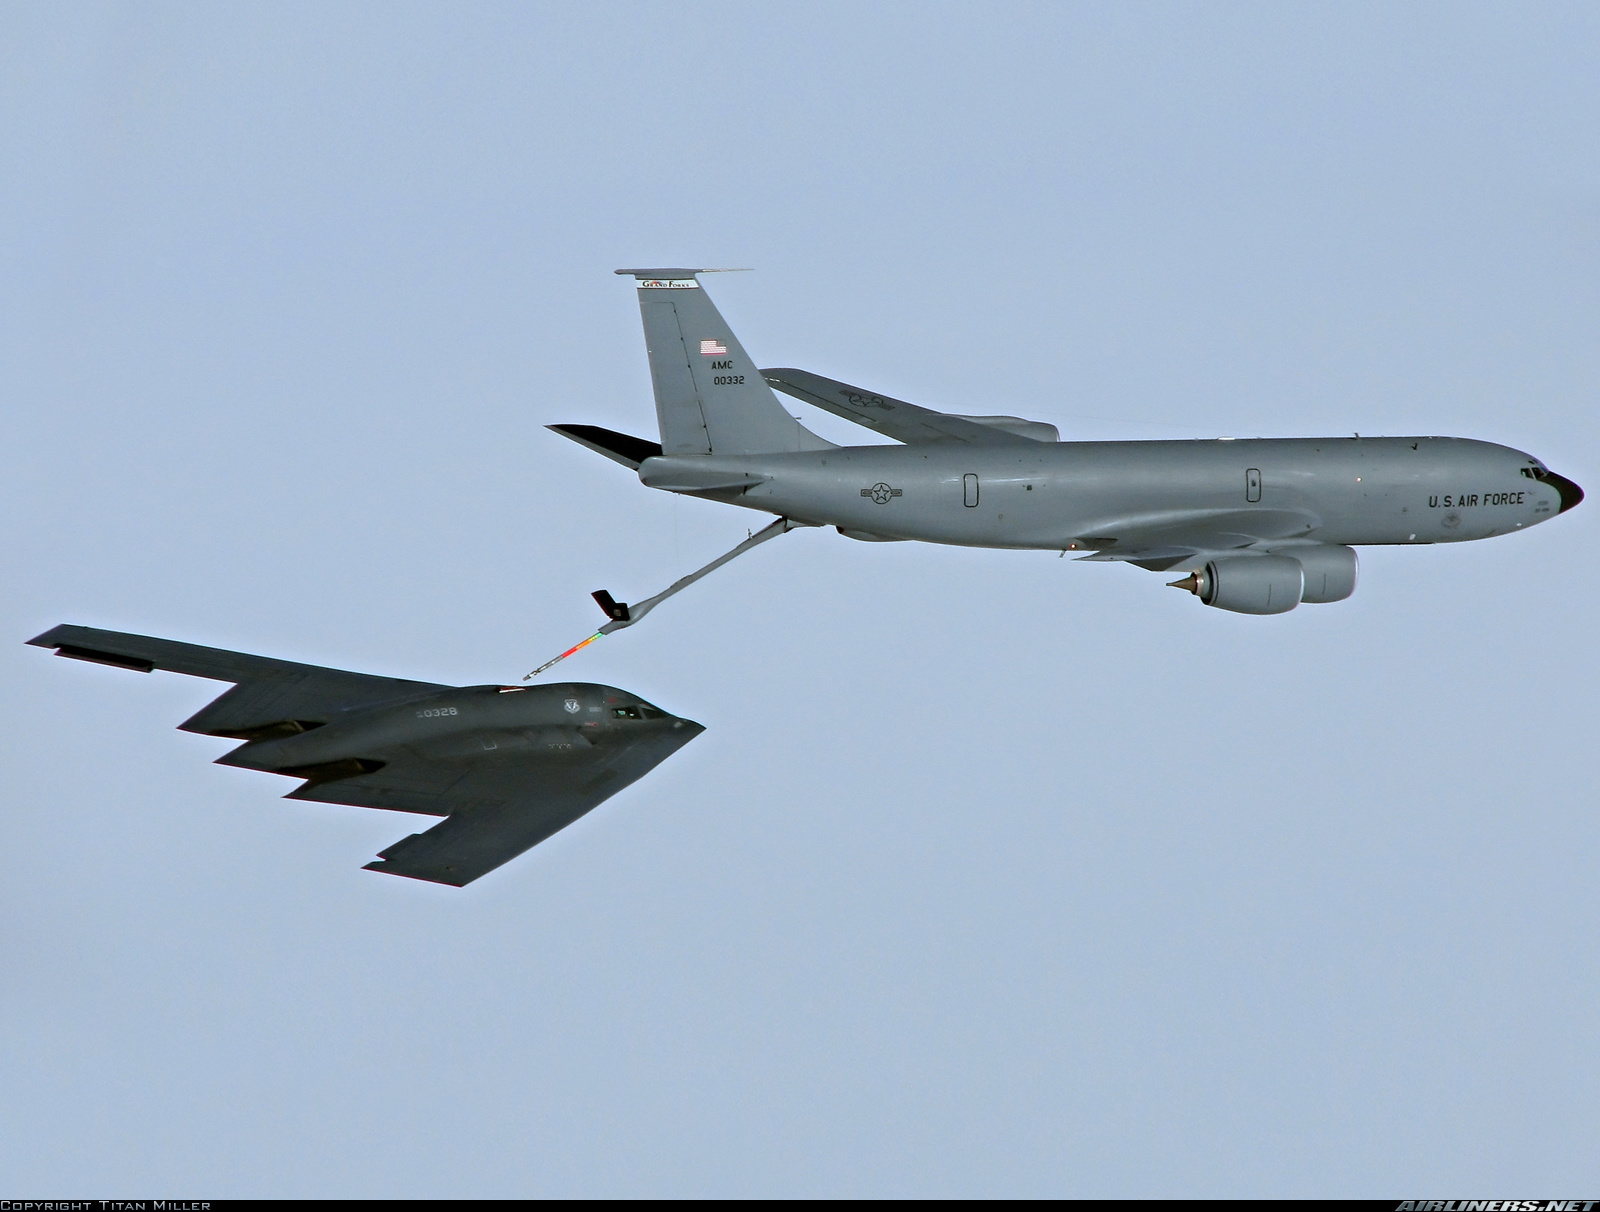 Boeing KC-135 Stratotanker Backgrounds, Compatible - PC, Mobile, Gadgets| 1600x1212 px